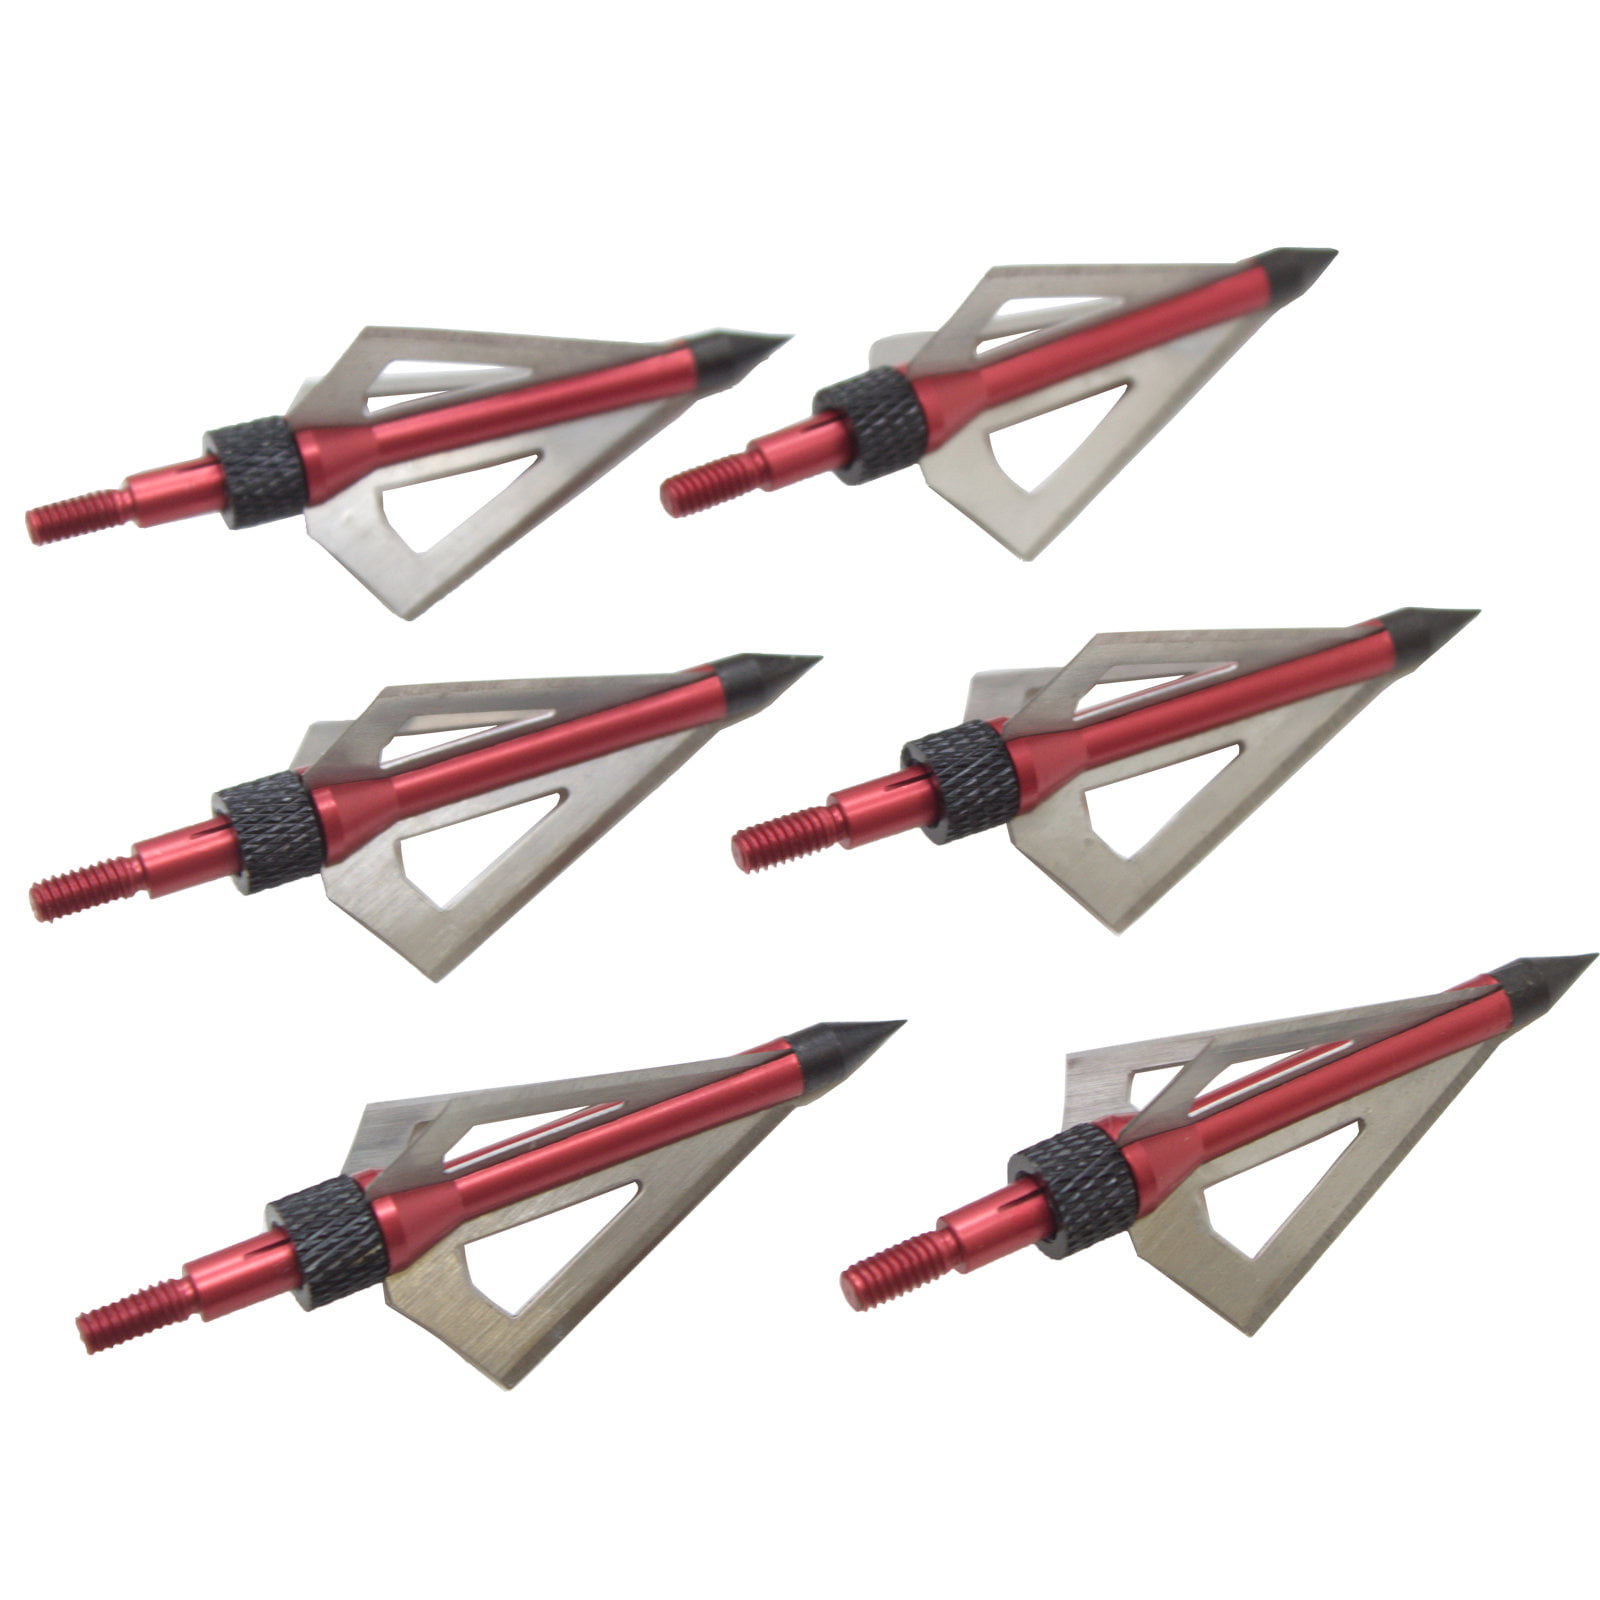 12pcs Mars Broadheads 100grain Archery Arrowheads Hunting Sharp Razor Blades for sale online 